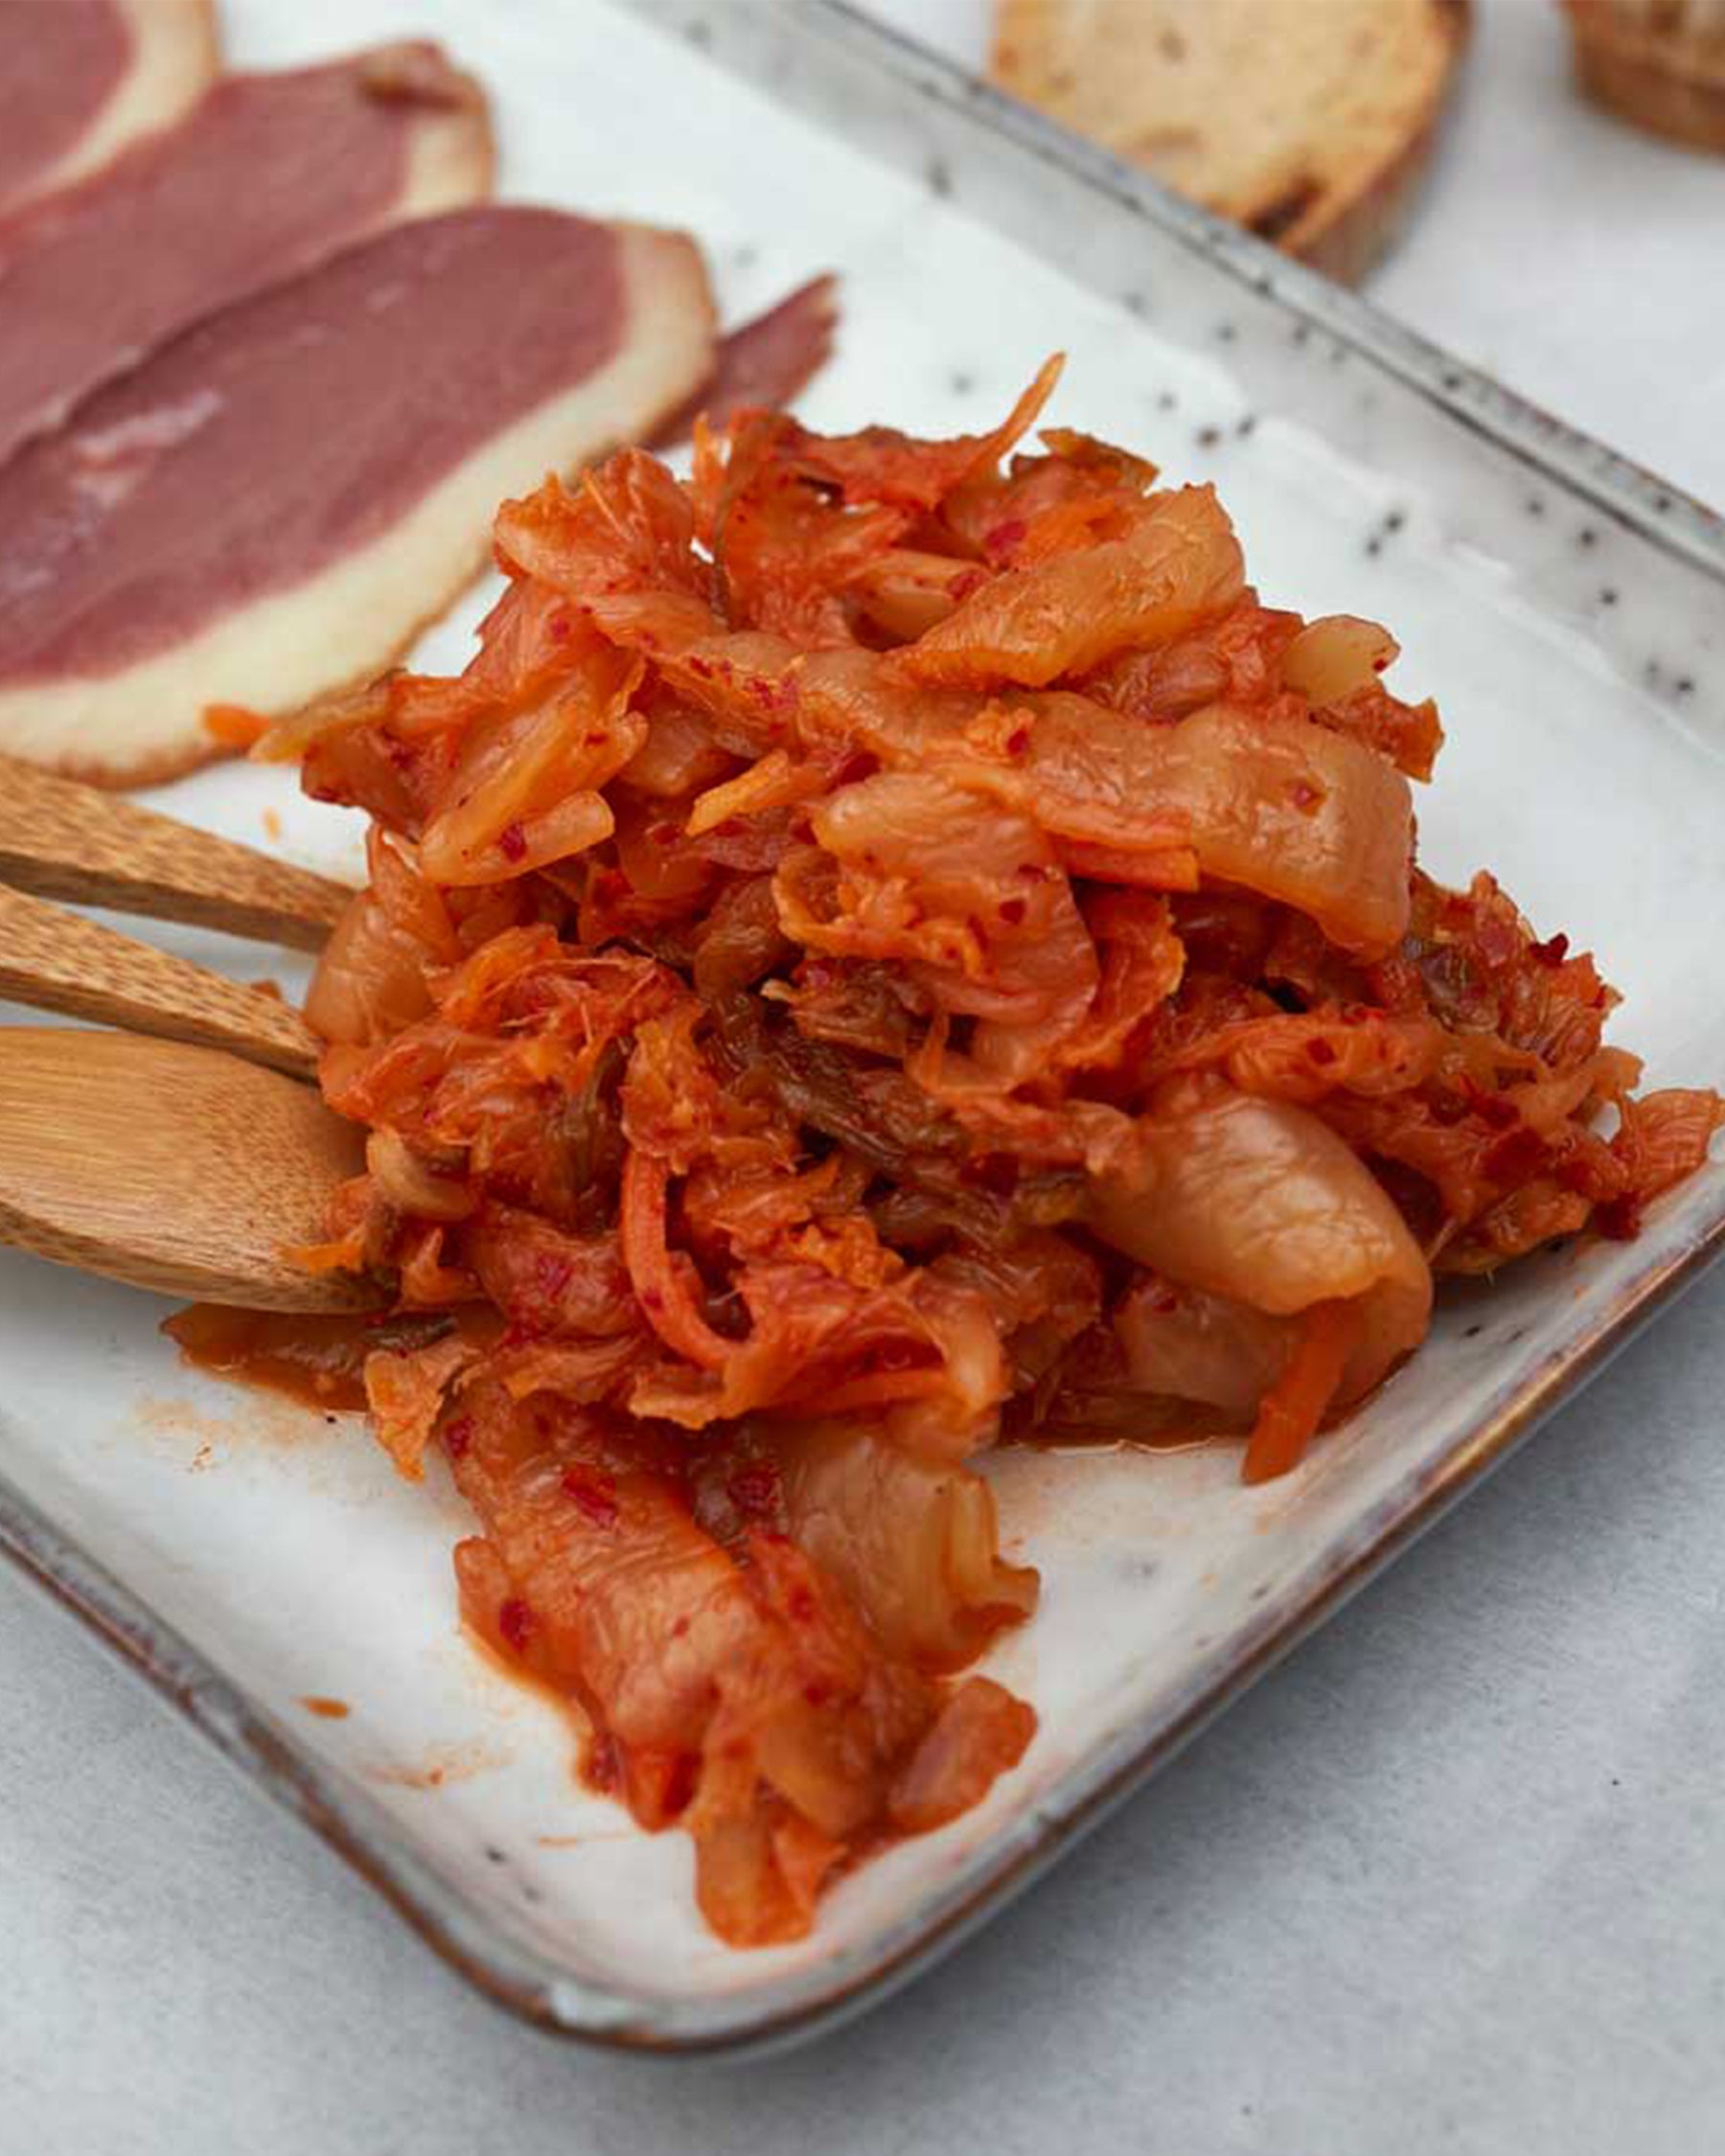 Kimchi de fermentacion salvaje 270 g